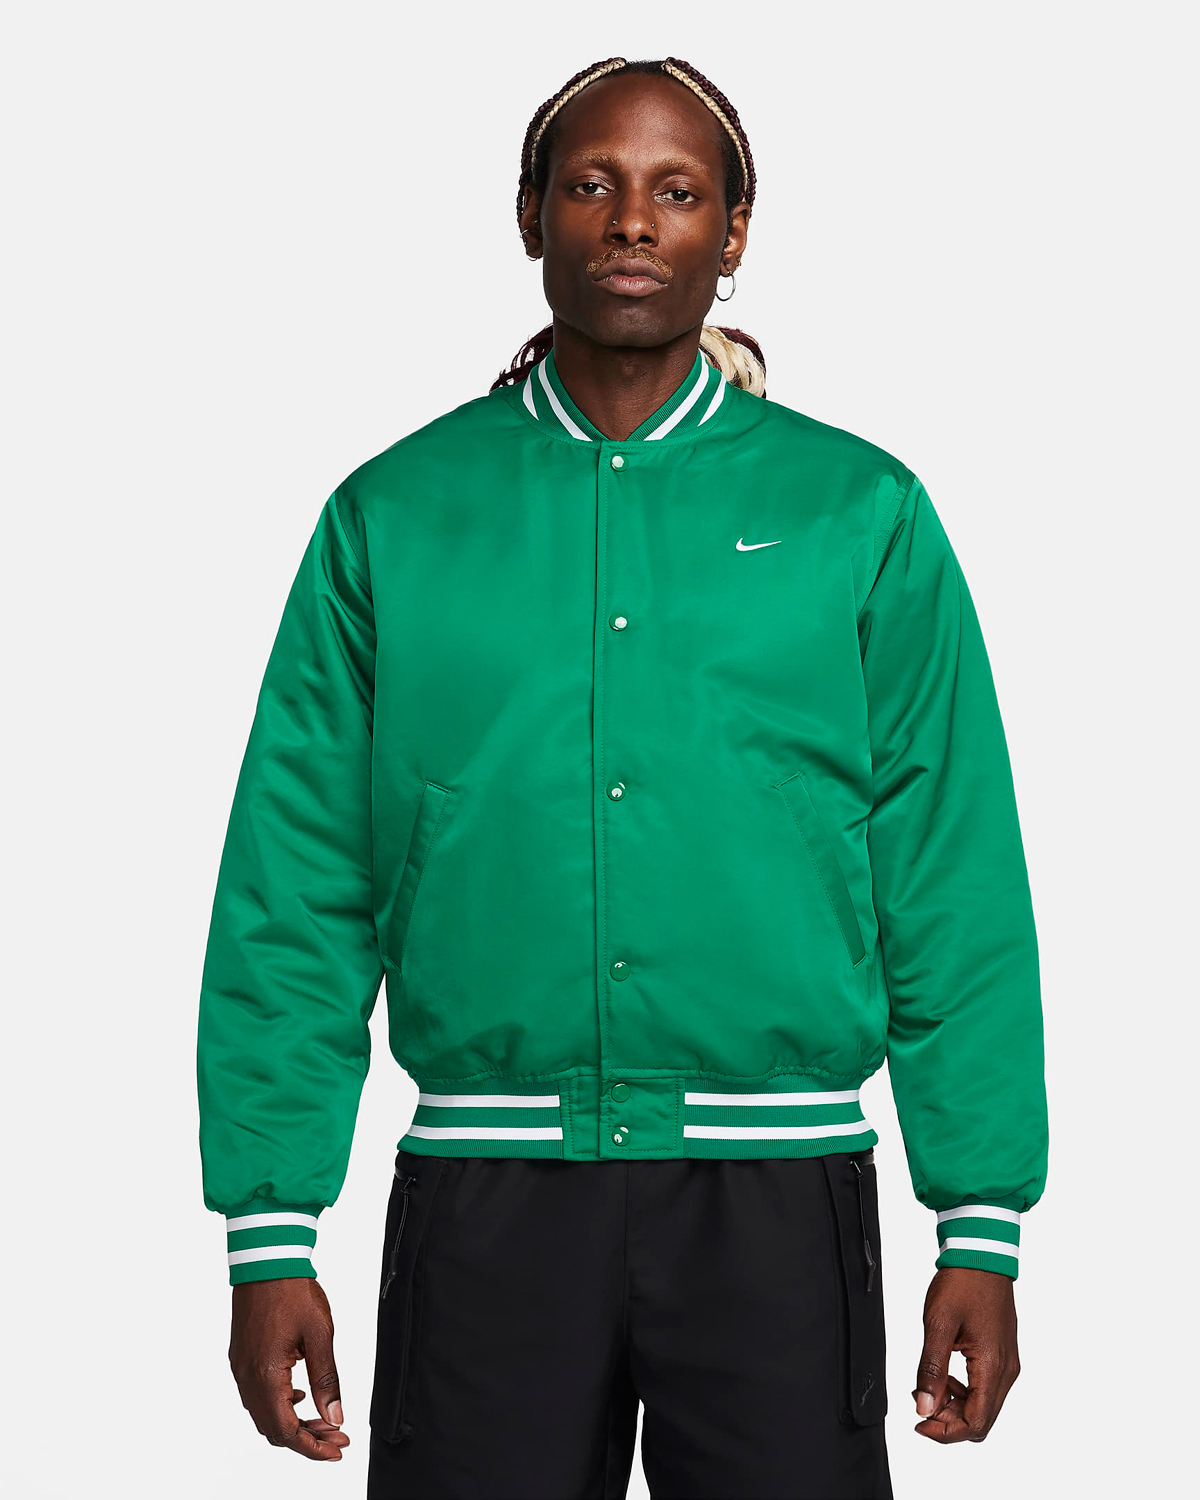 Nike-Authentics-Dugout-Jacket-Malachite-Green